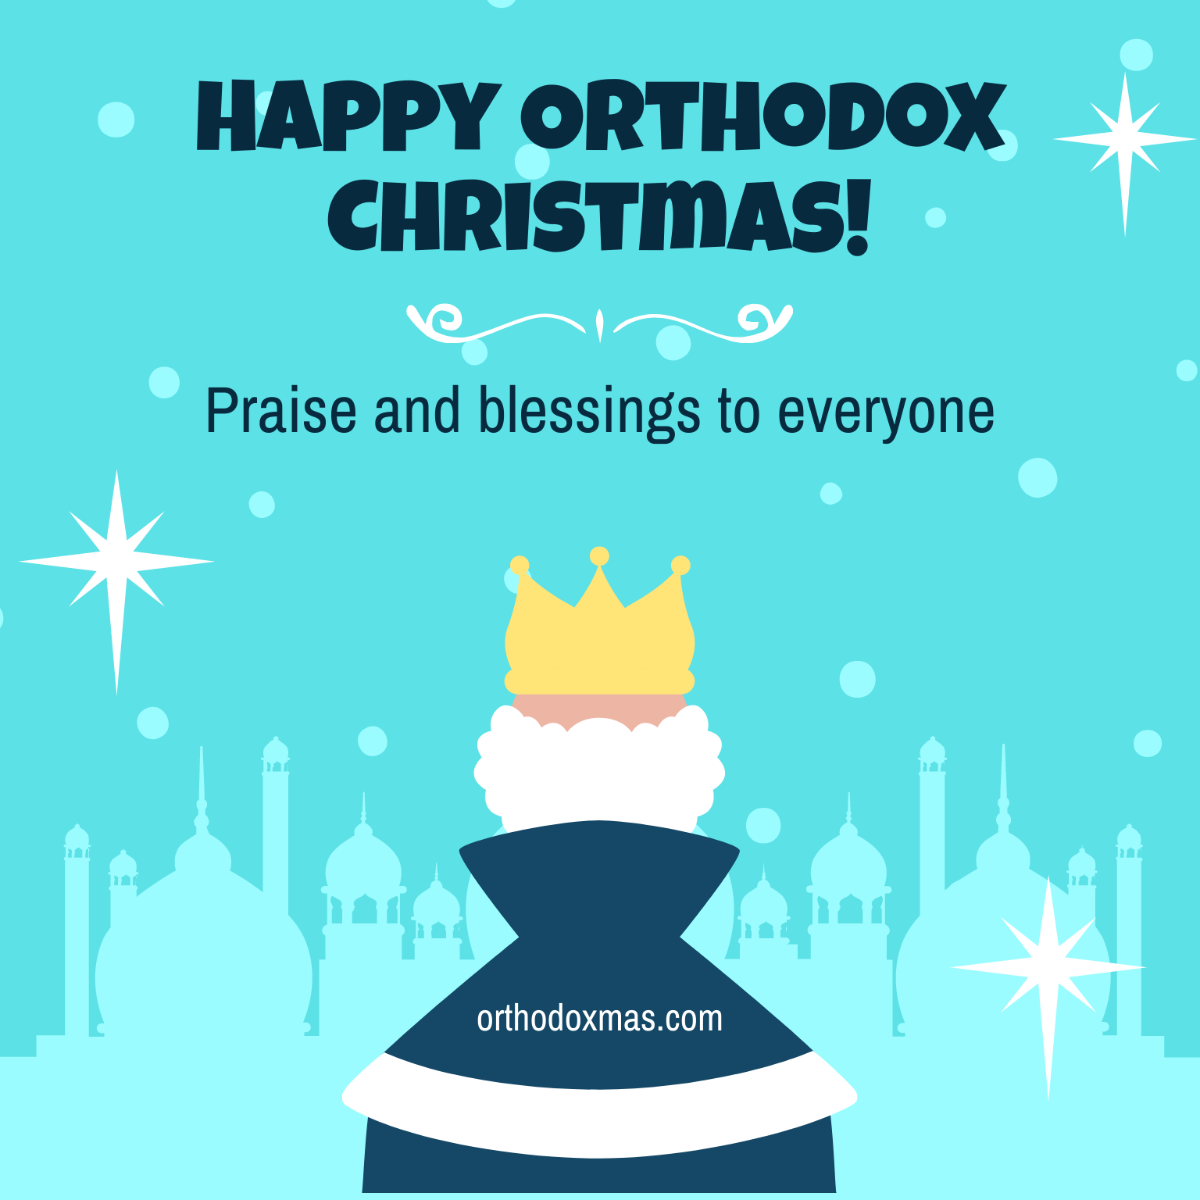 Orthodox Christmas Poster Vector